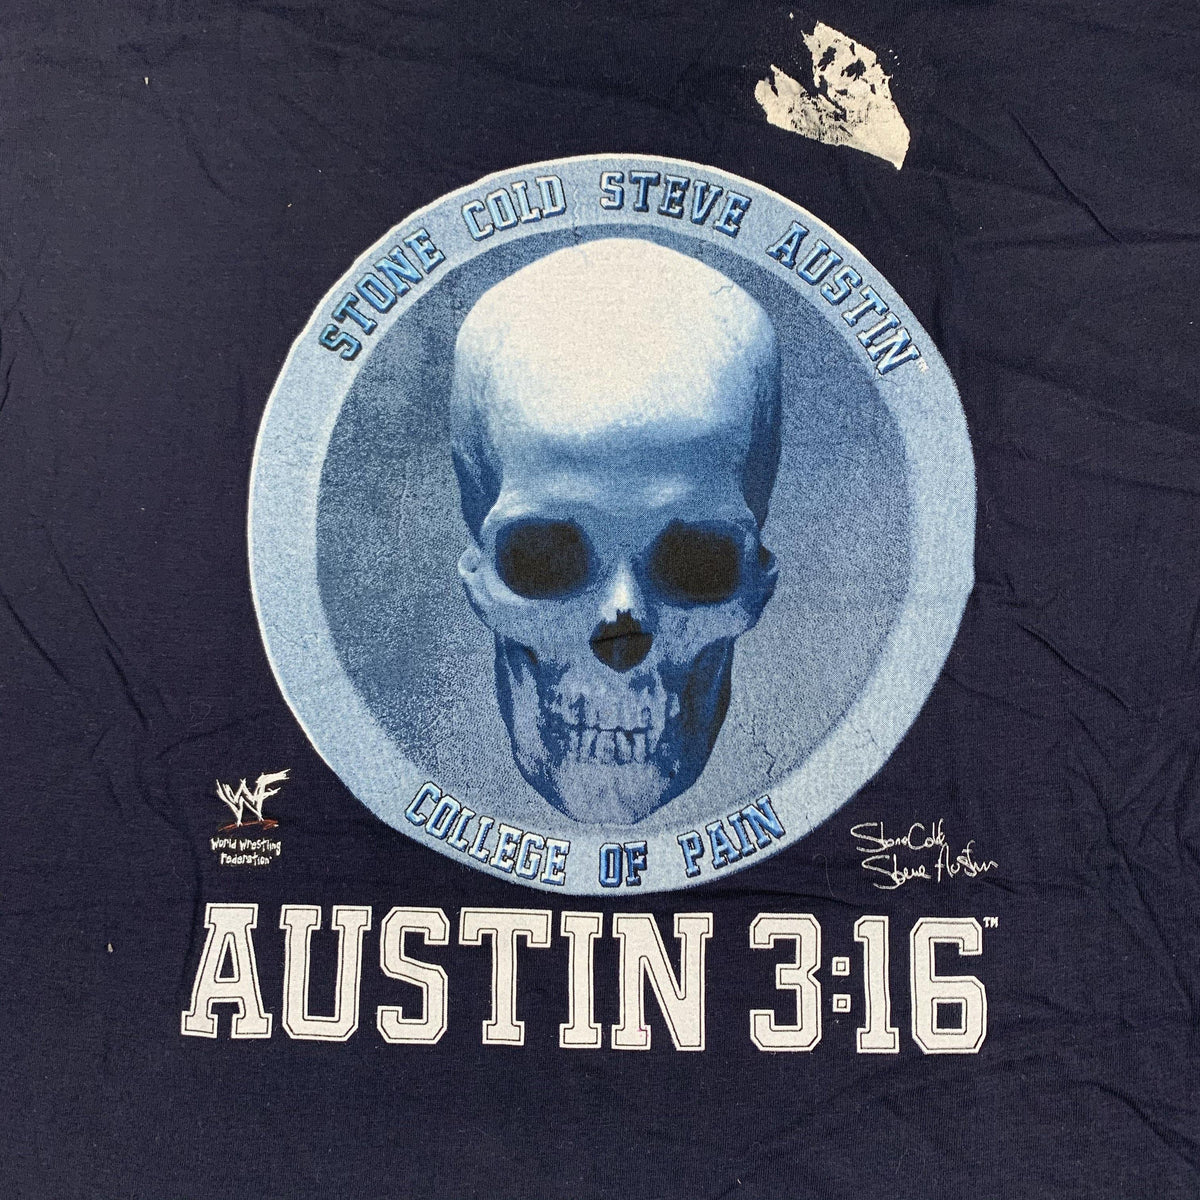 Vintage Stone Cold “Austin 3:16” T-Shirt - jointcustodydc